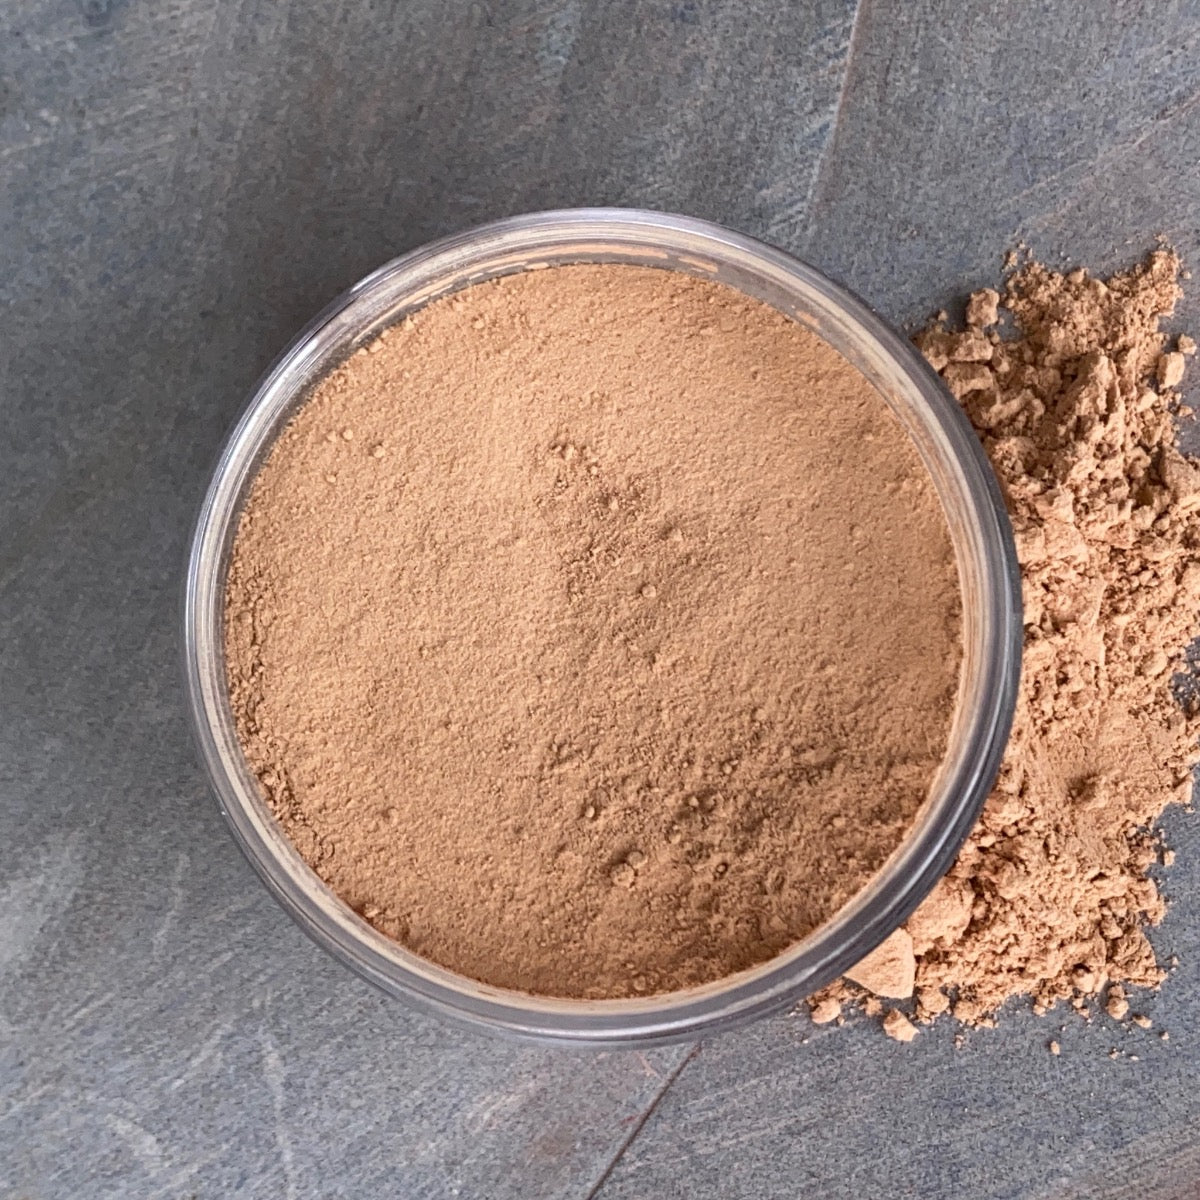 Golden Tan loose powder foundation